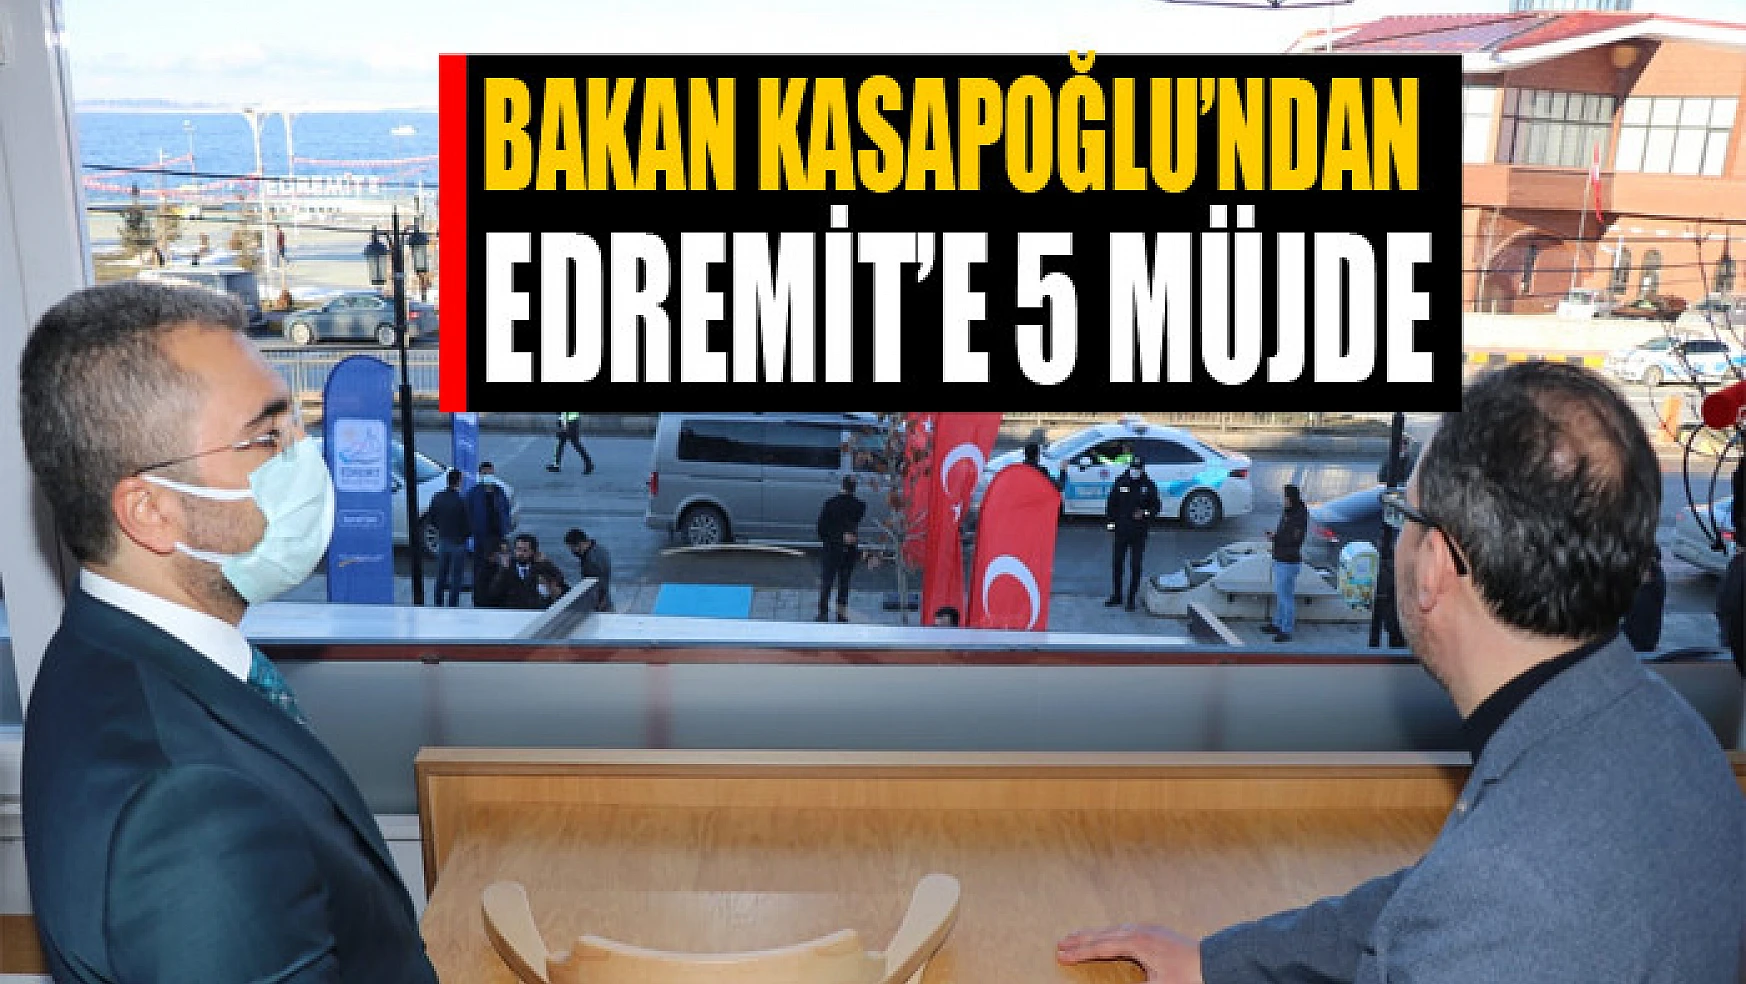 Bakan Kasapoğlu'ndan Edremit'e 5 müjde